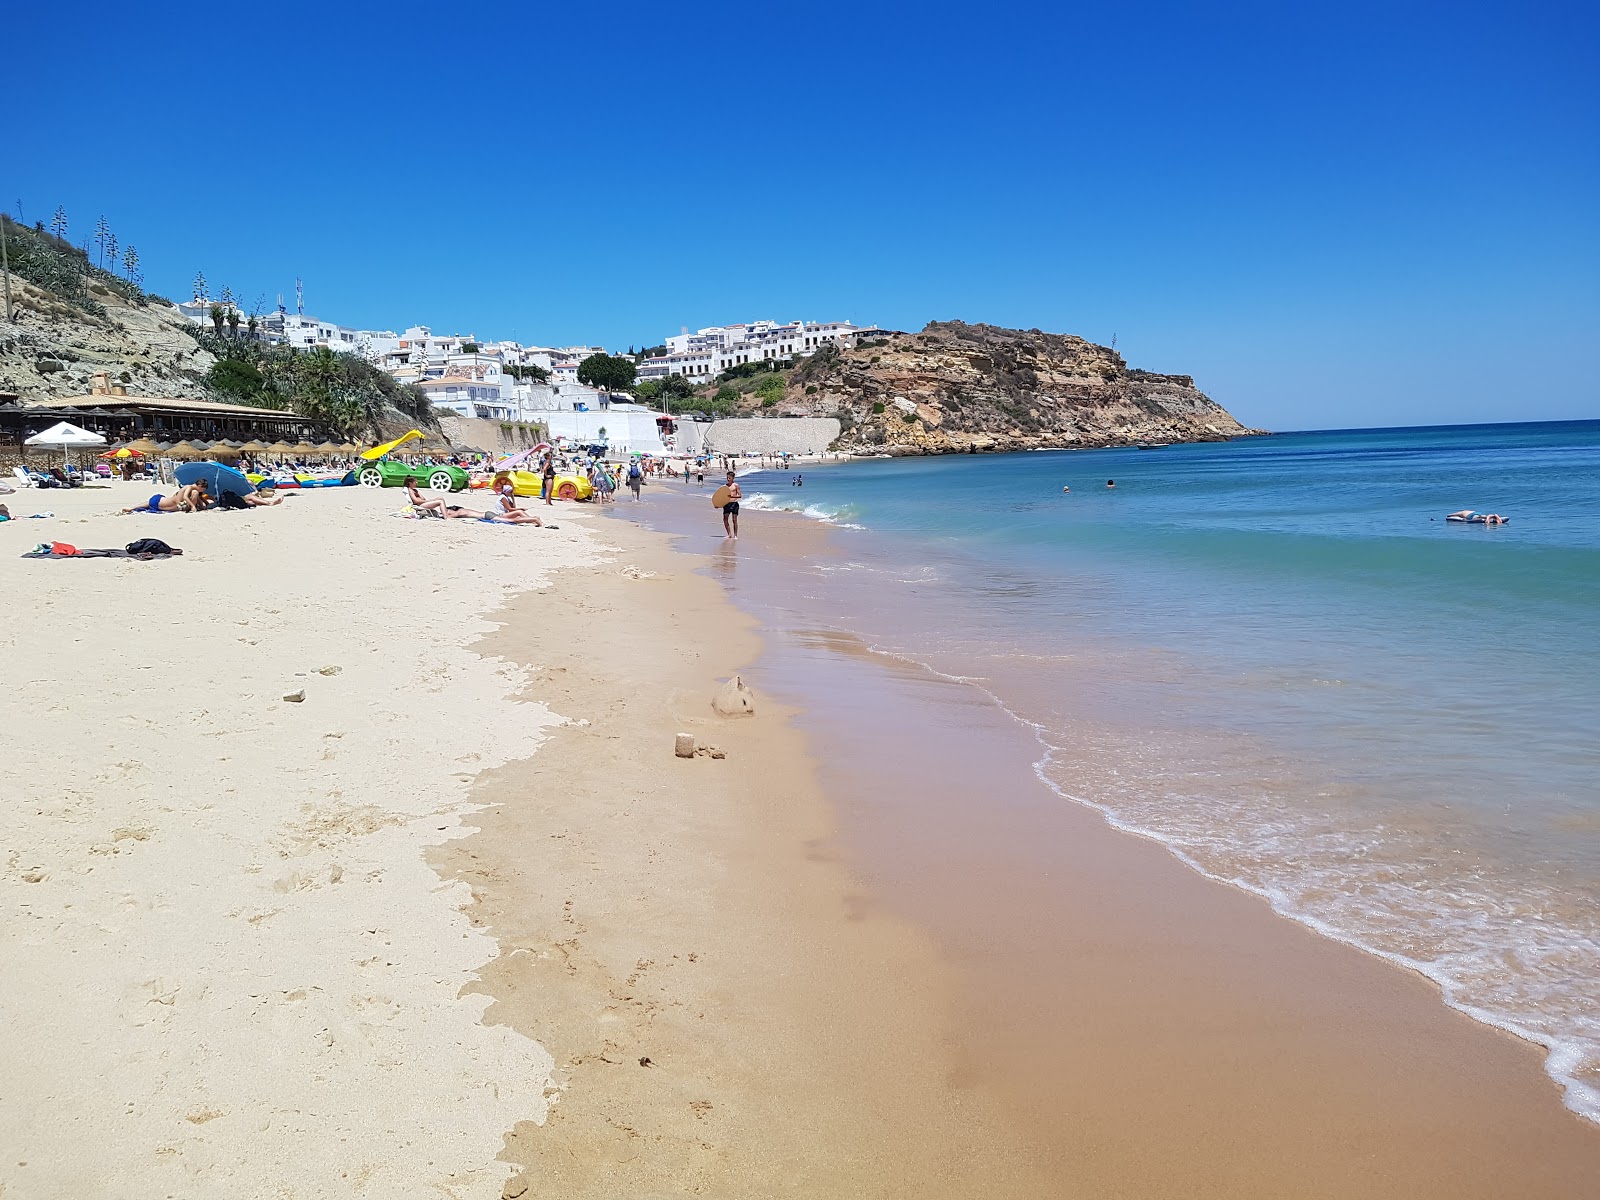 Fotografie cu Praia do Burgau cu nivelul de curățenie in medie